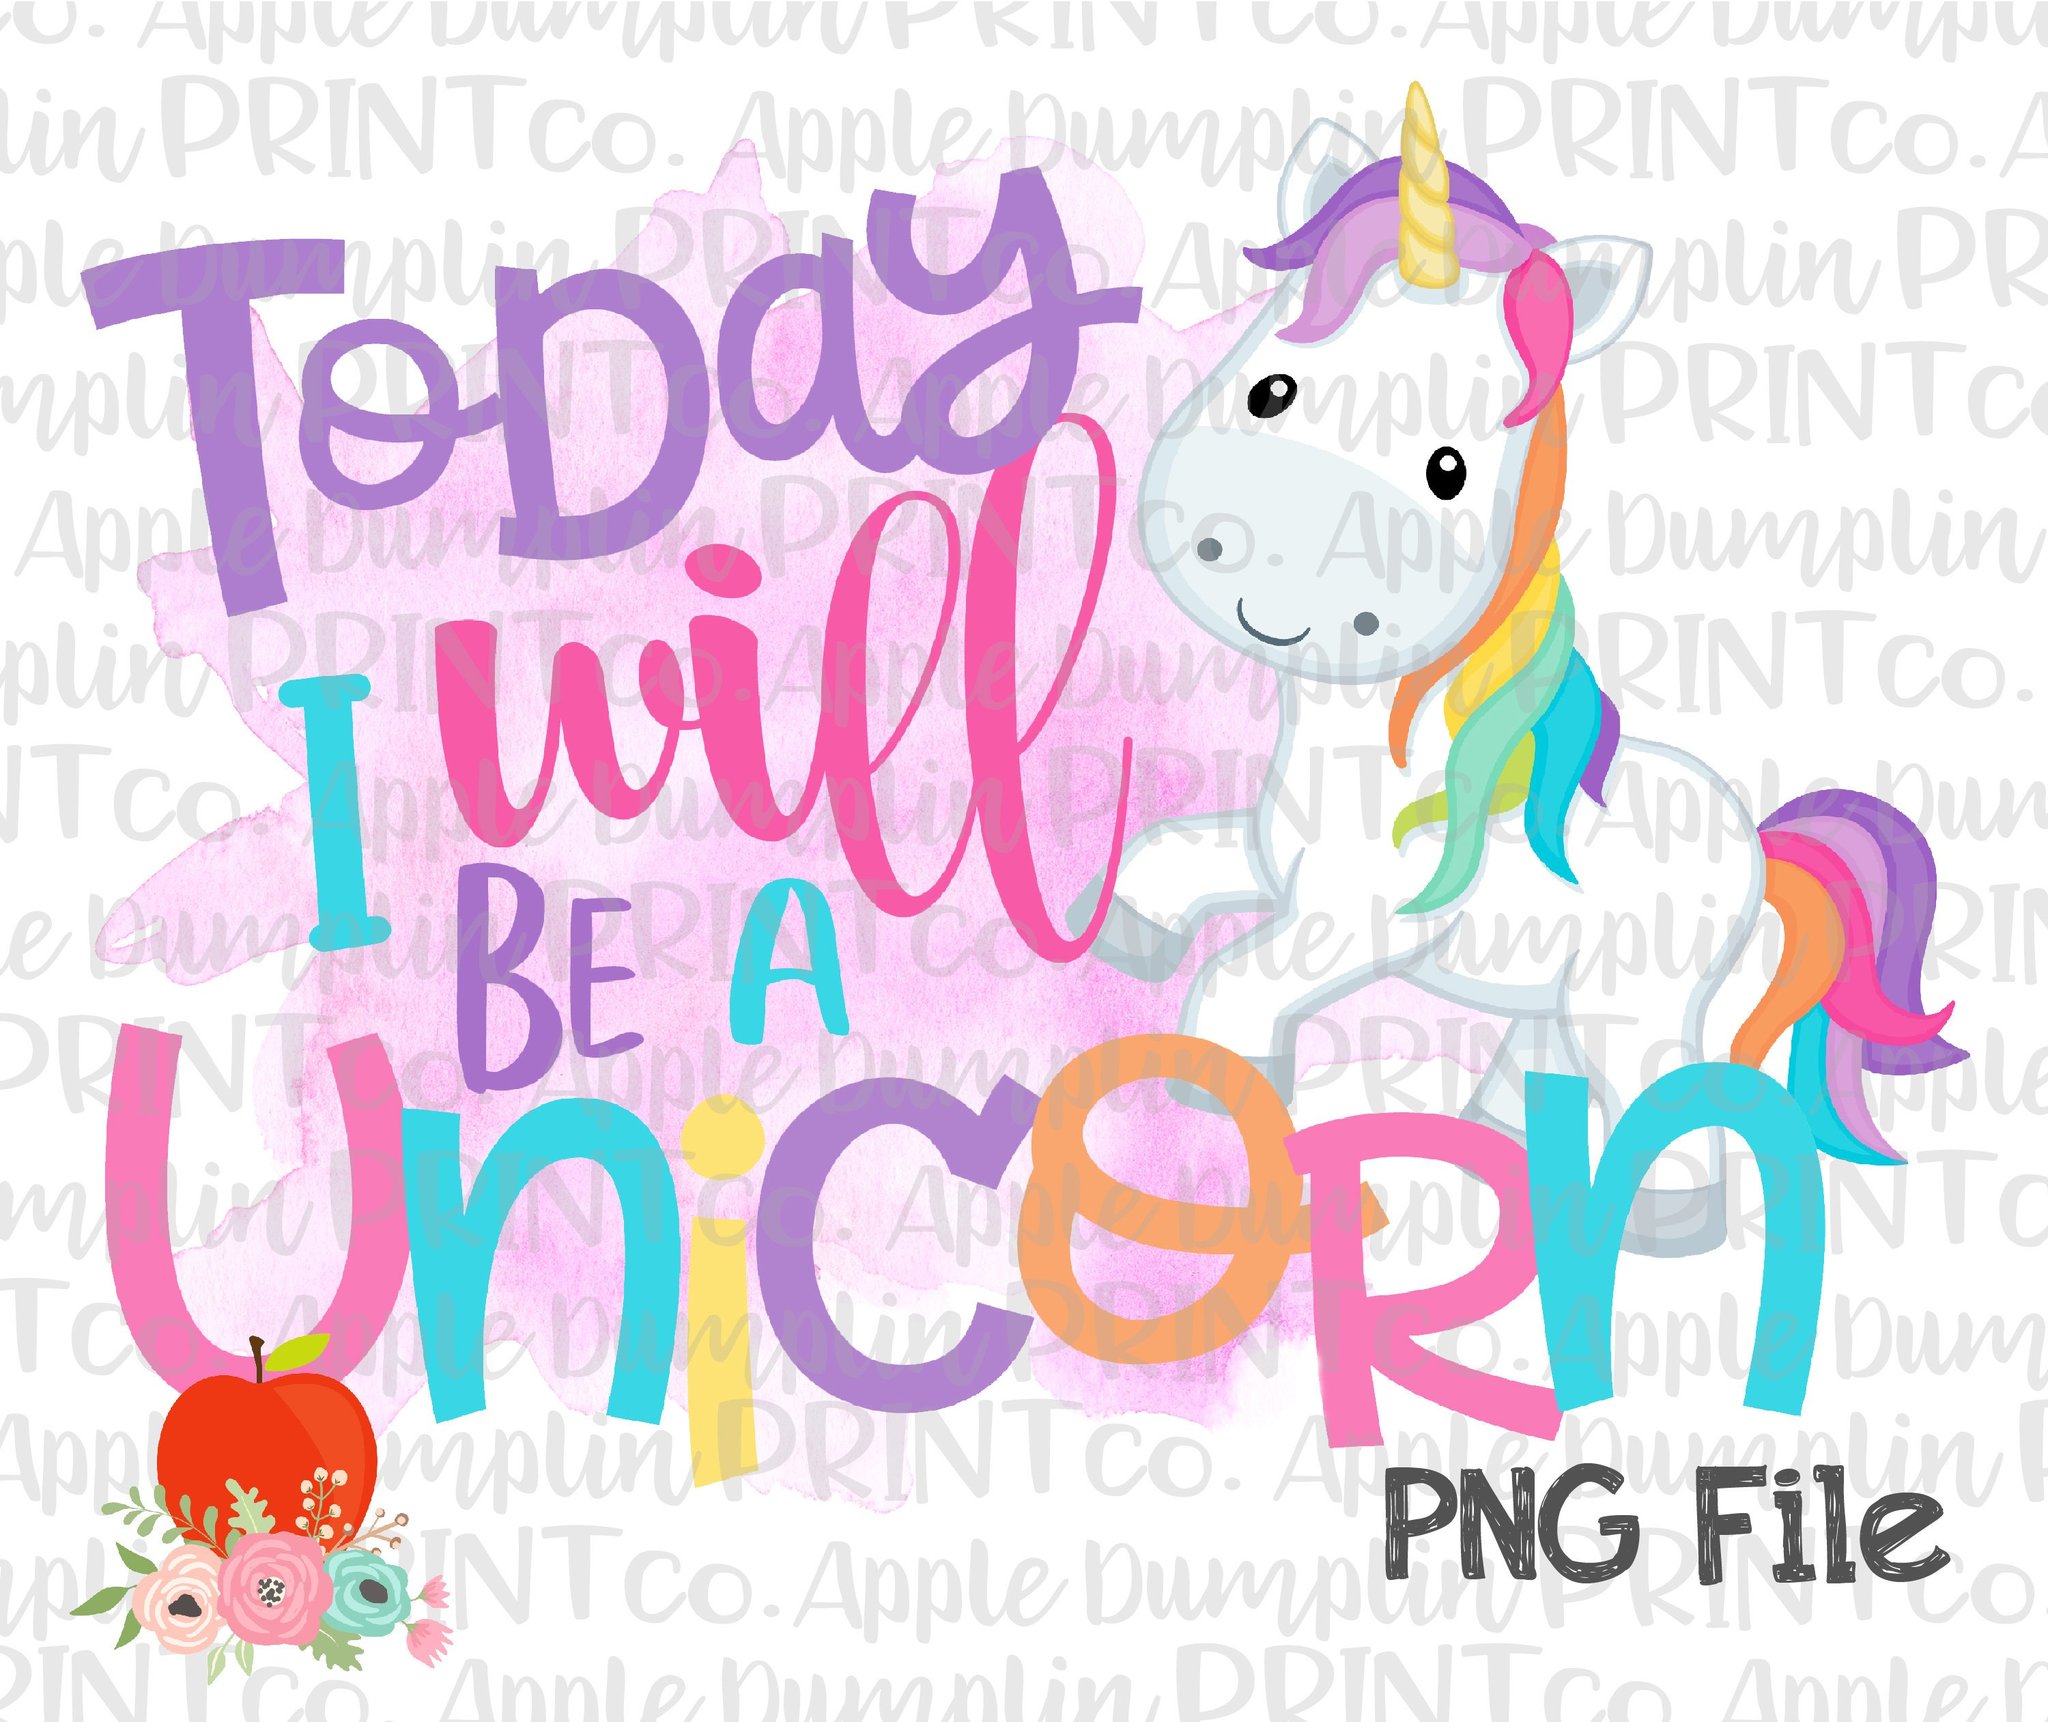 Today will unicorn.